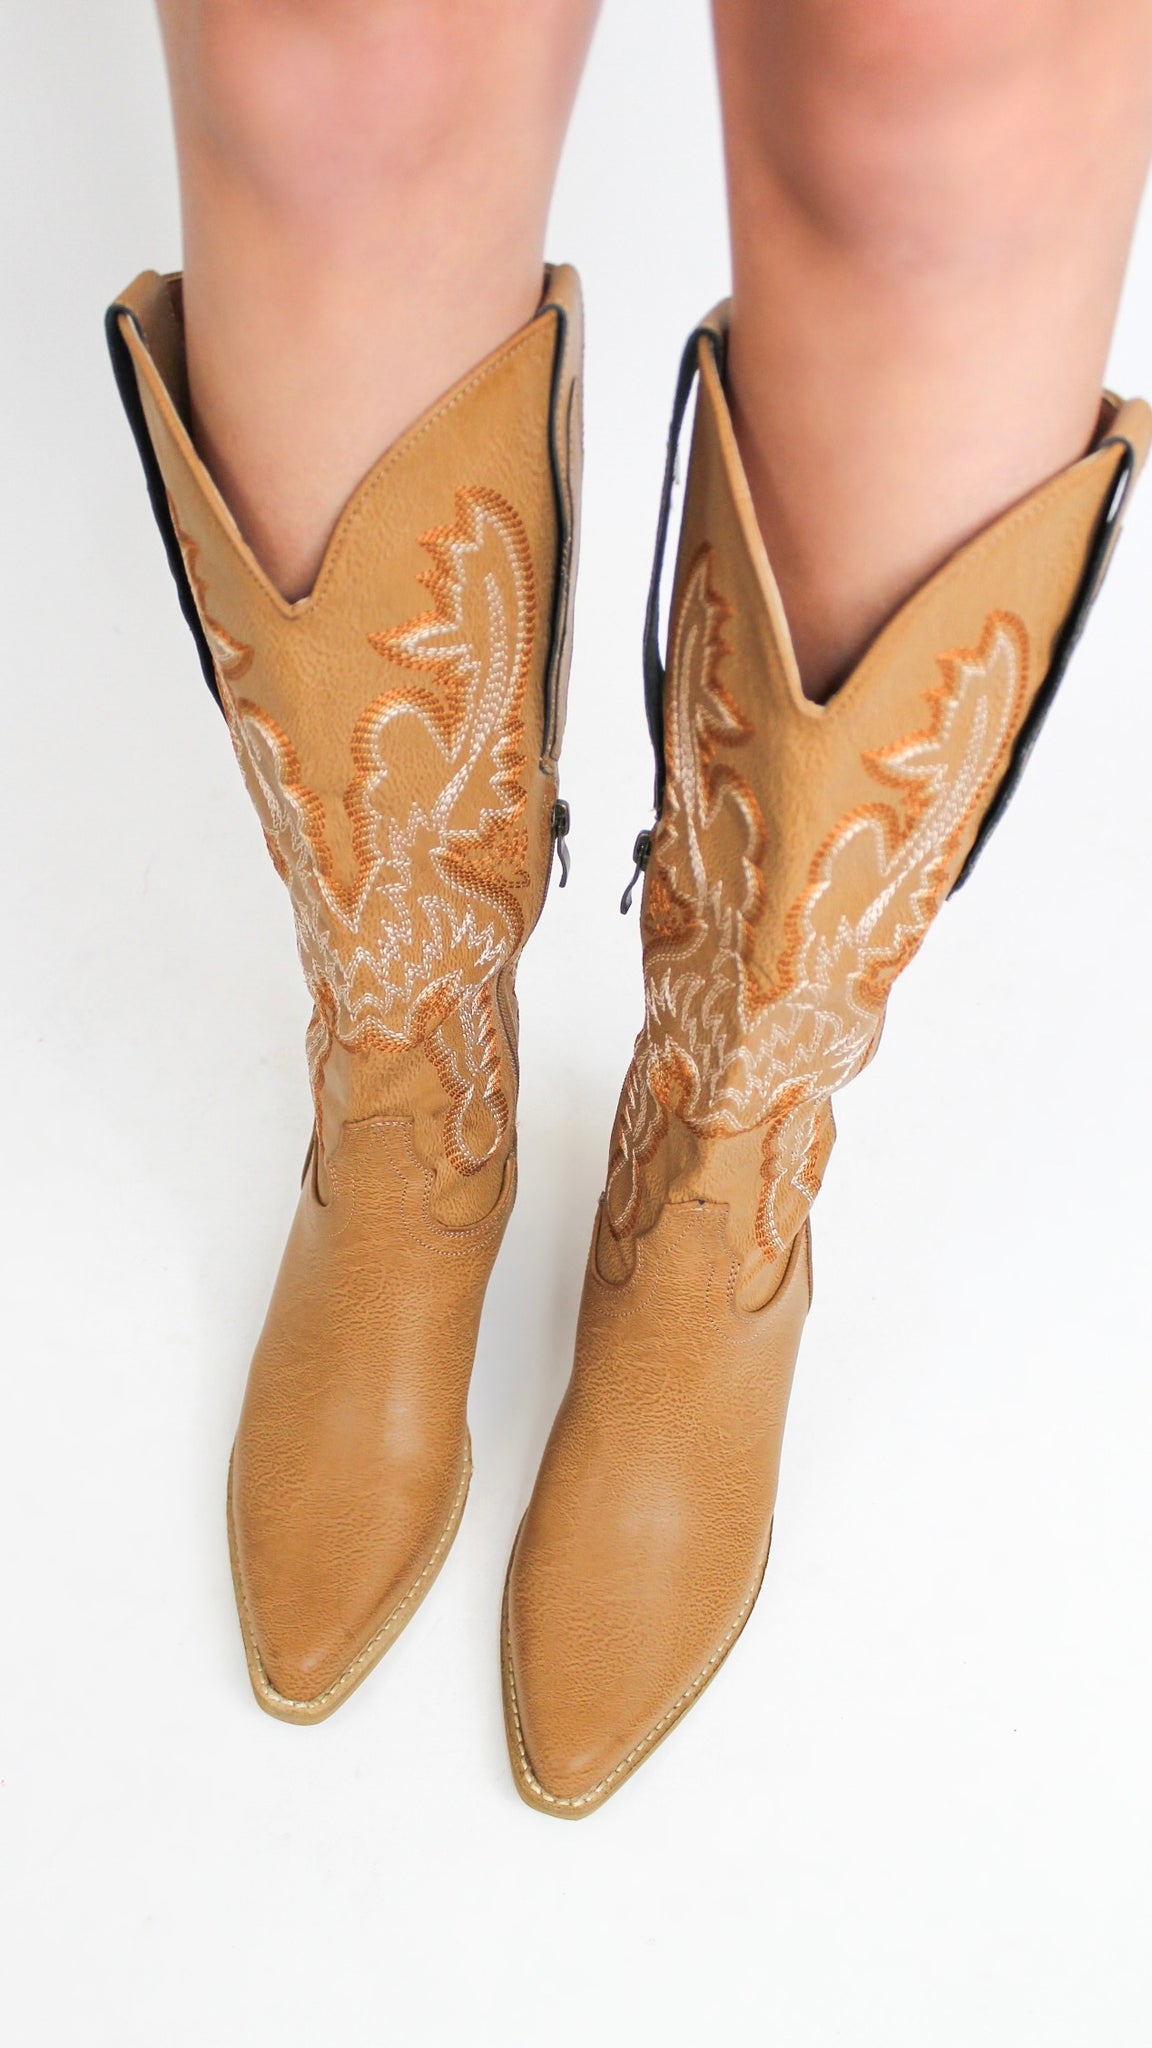 'Natalie' Cowboy Boot